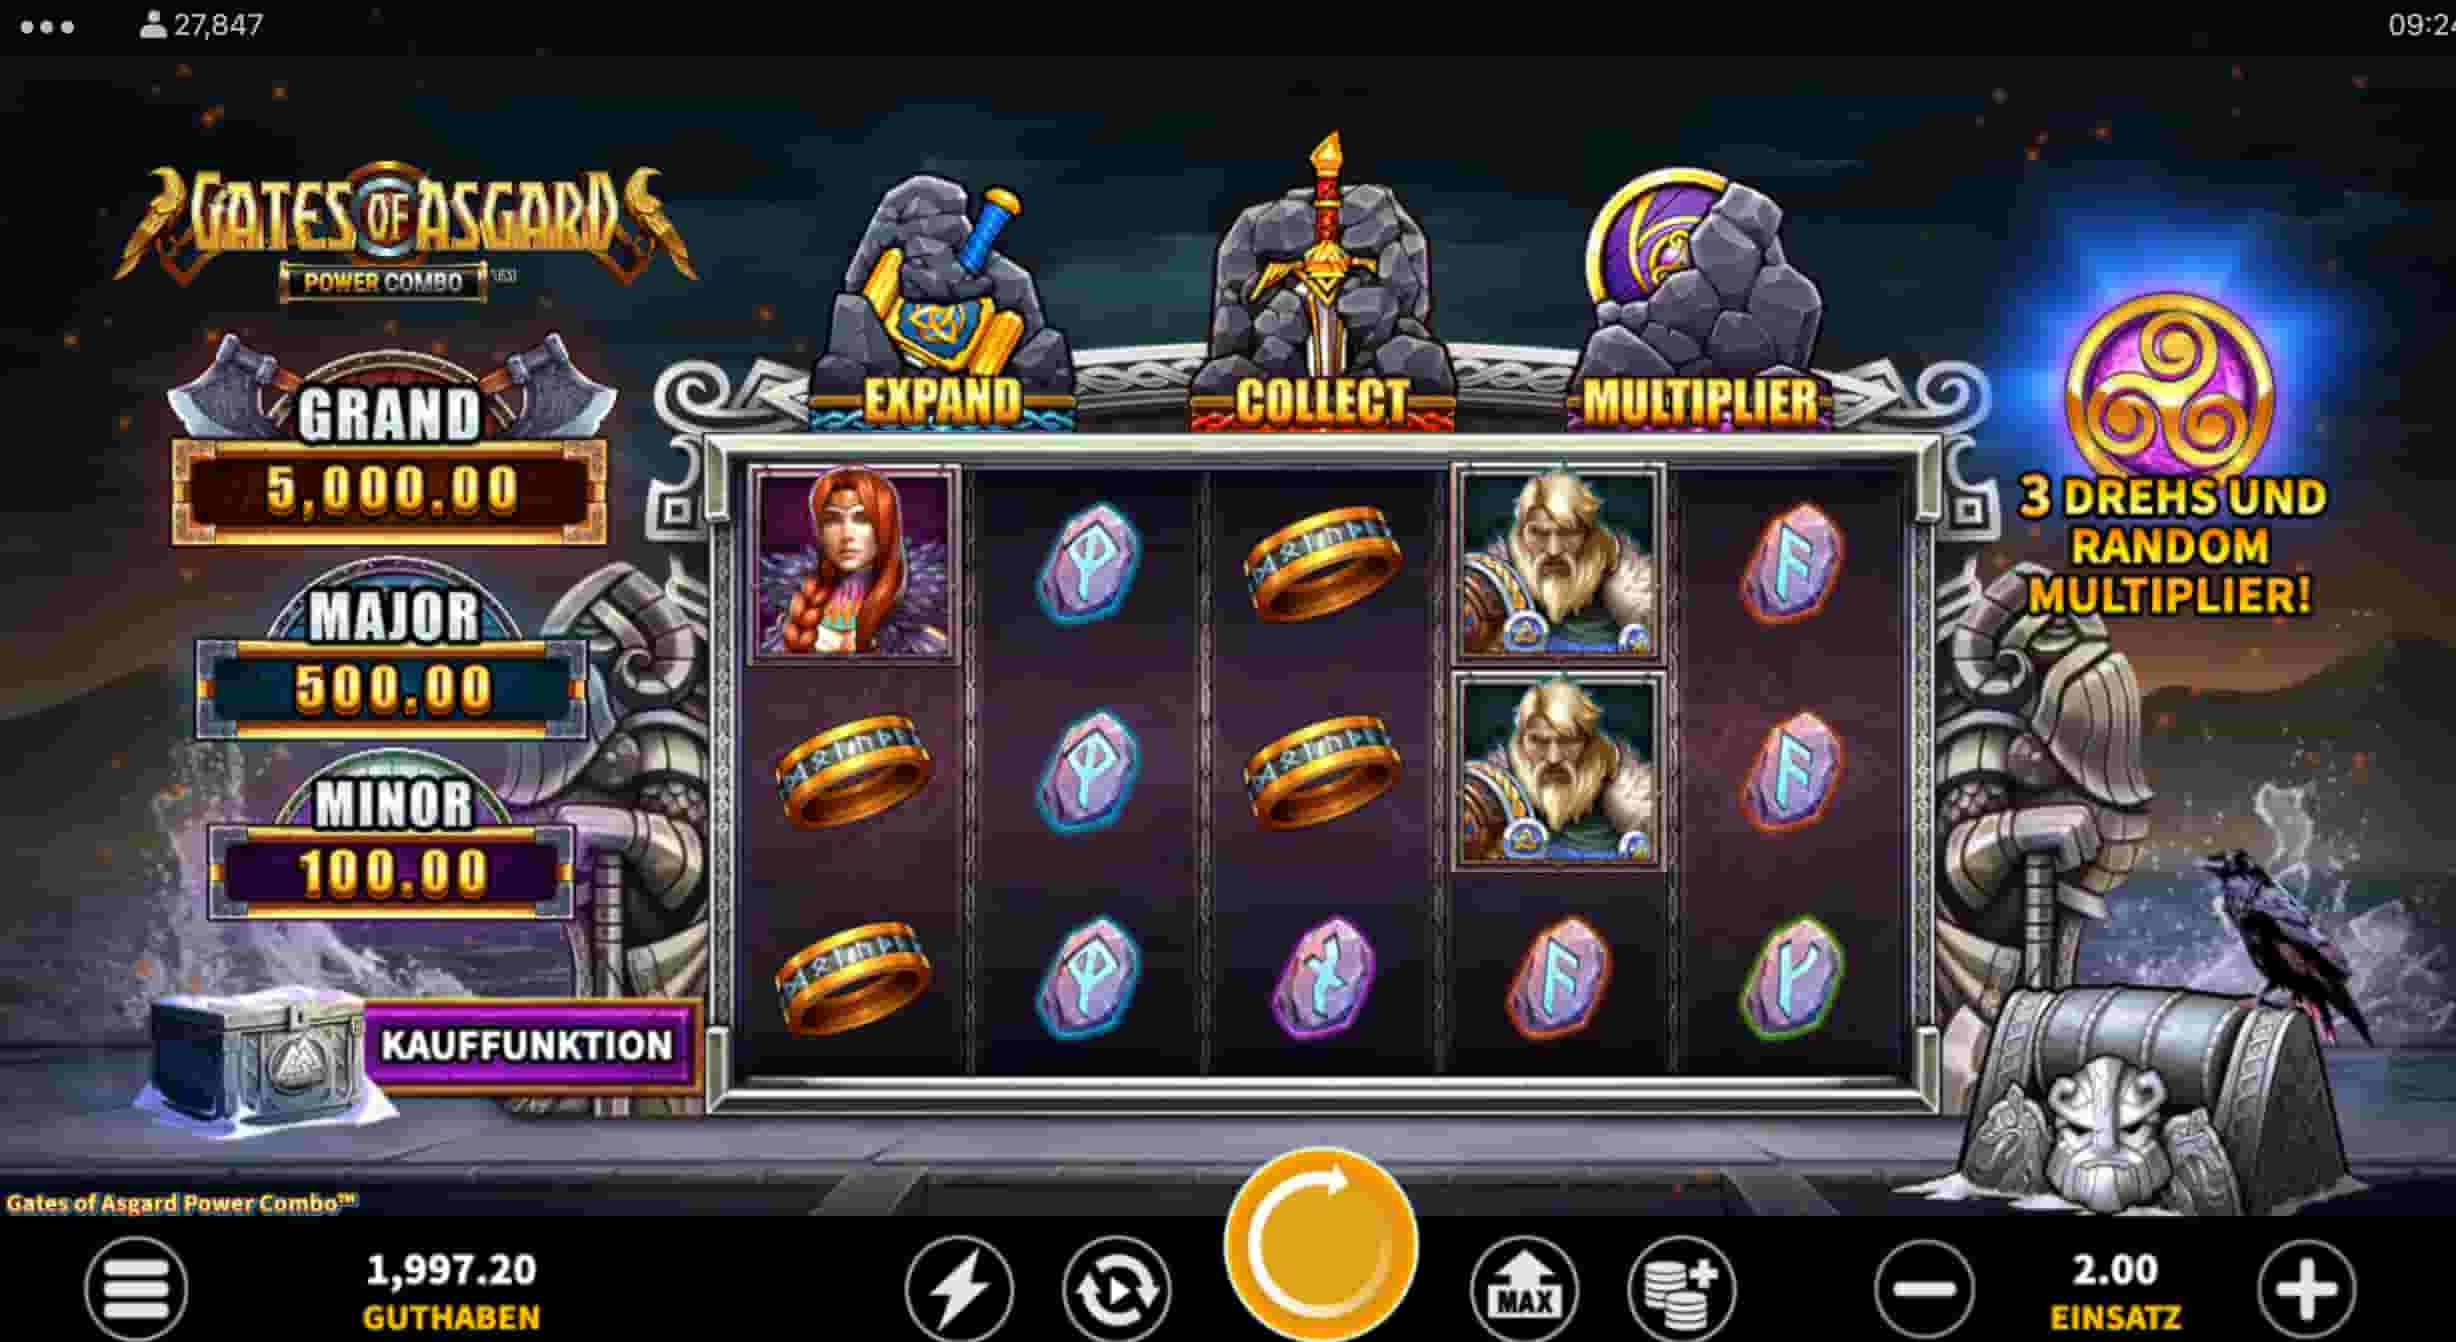 Gates of Asgard Power Combo screenshot 3